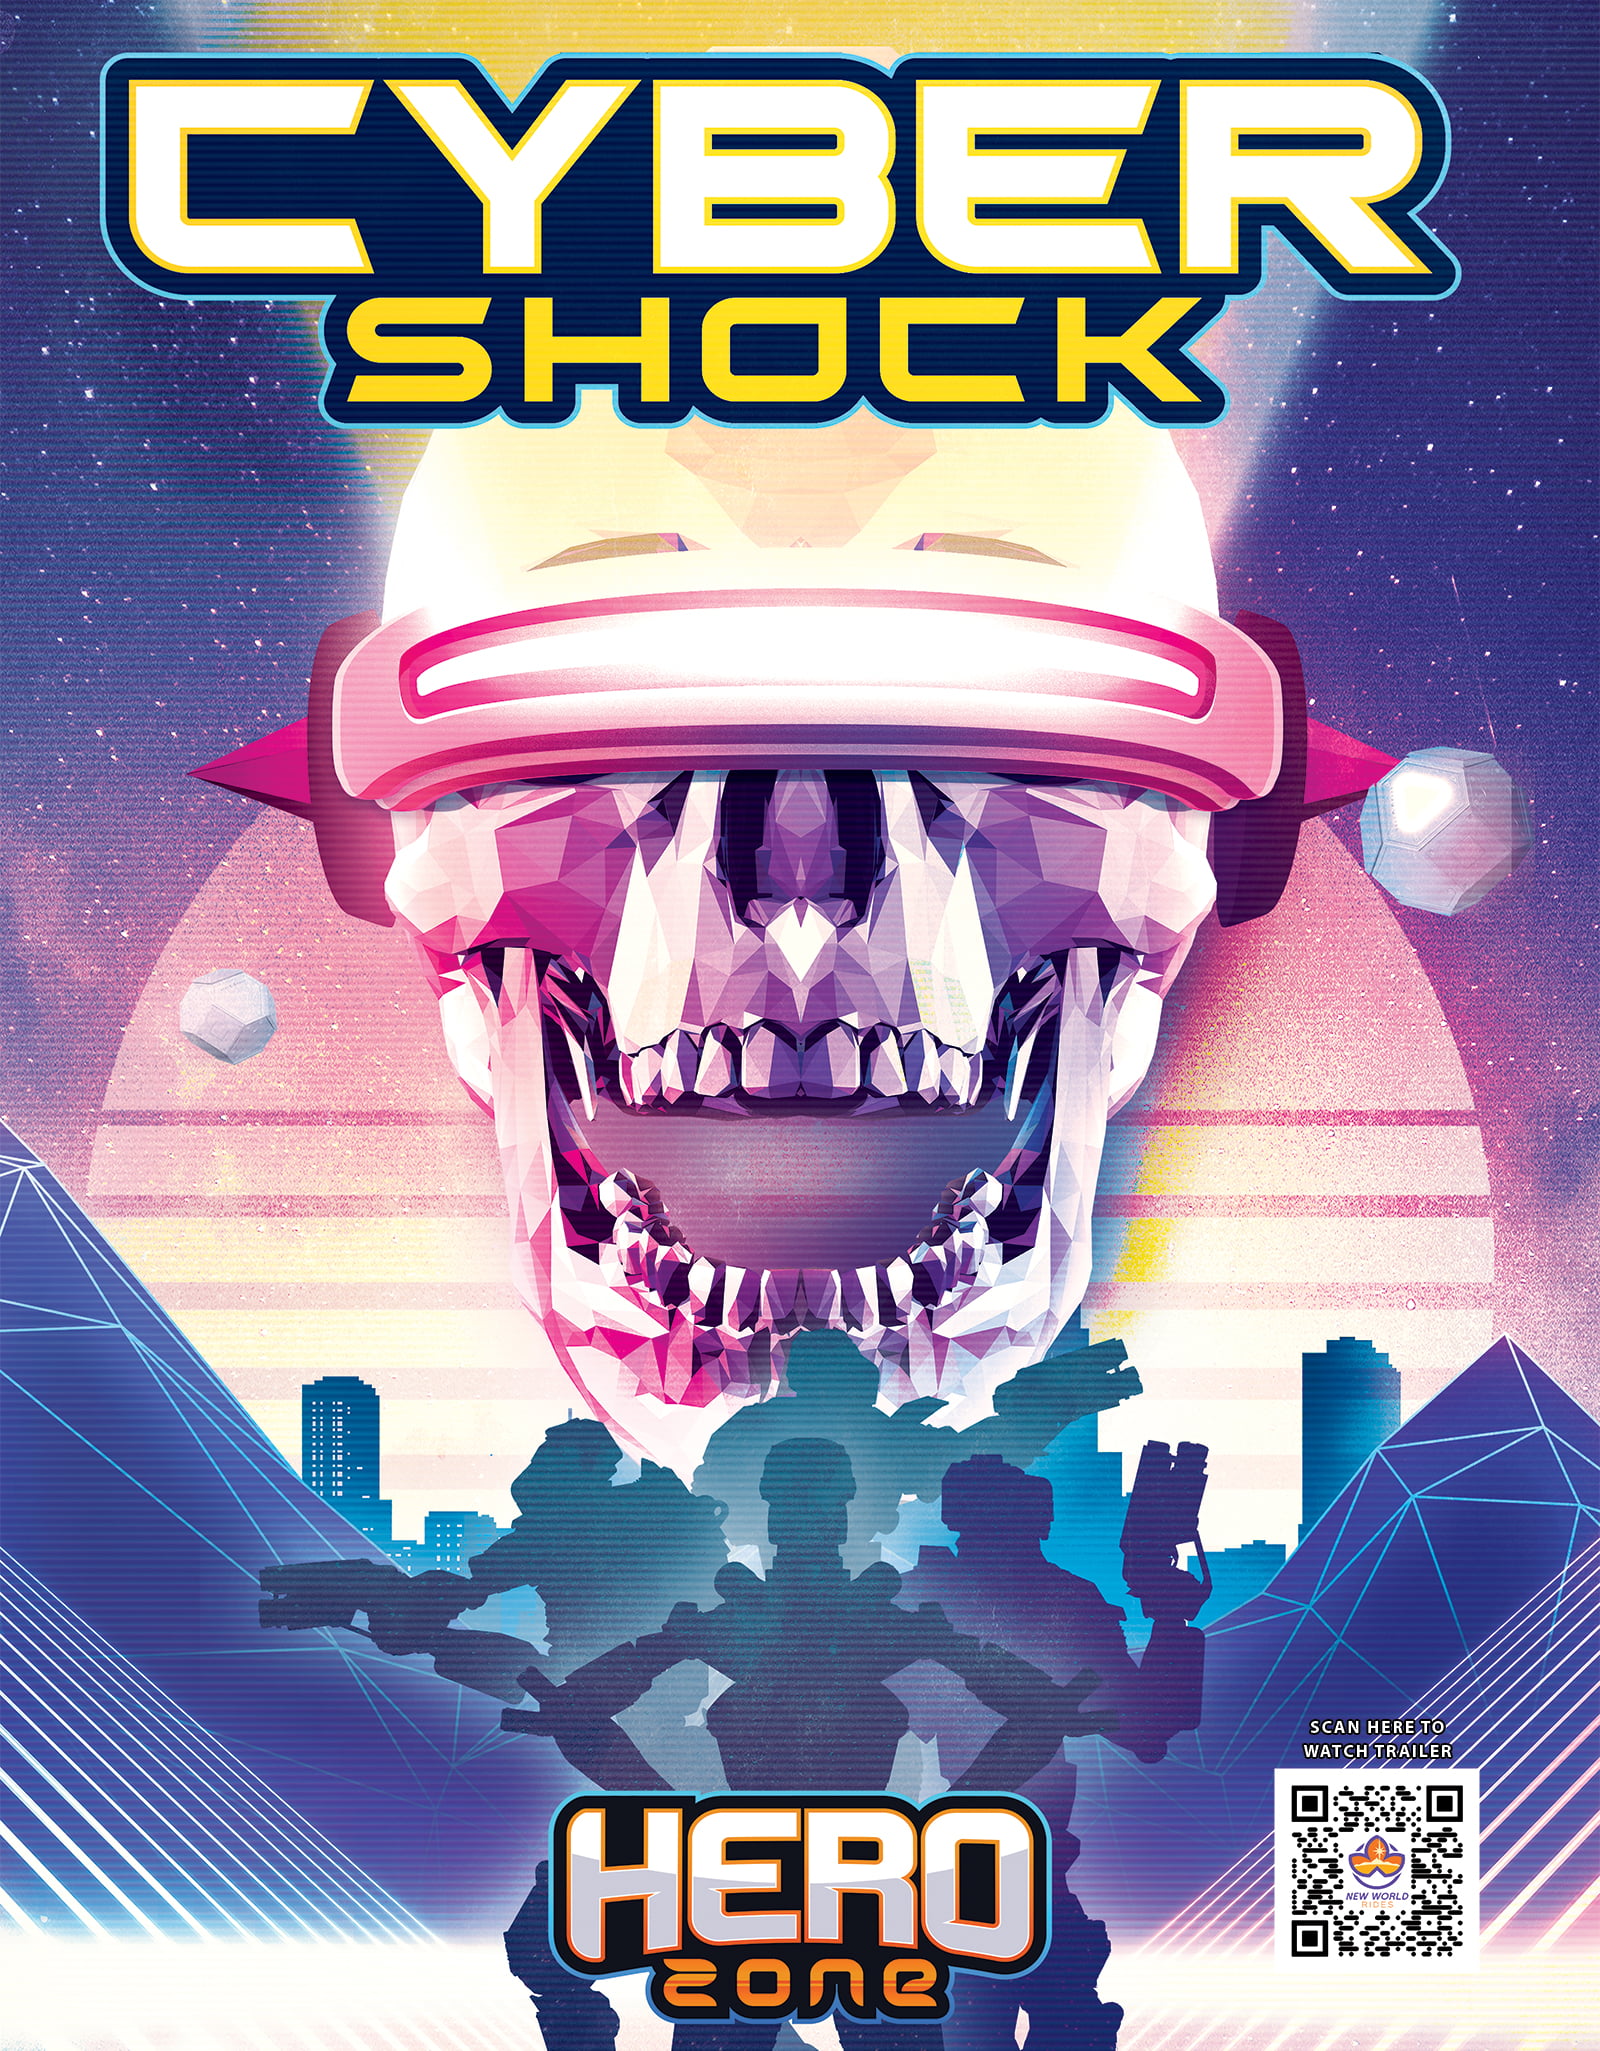 Cybershock poster